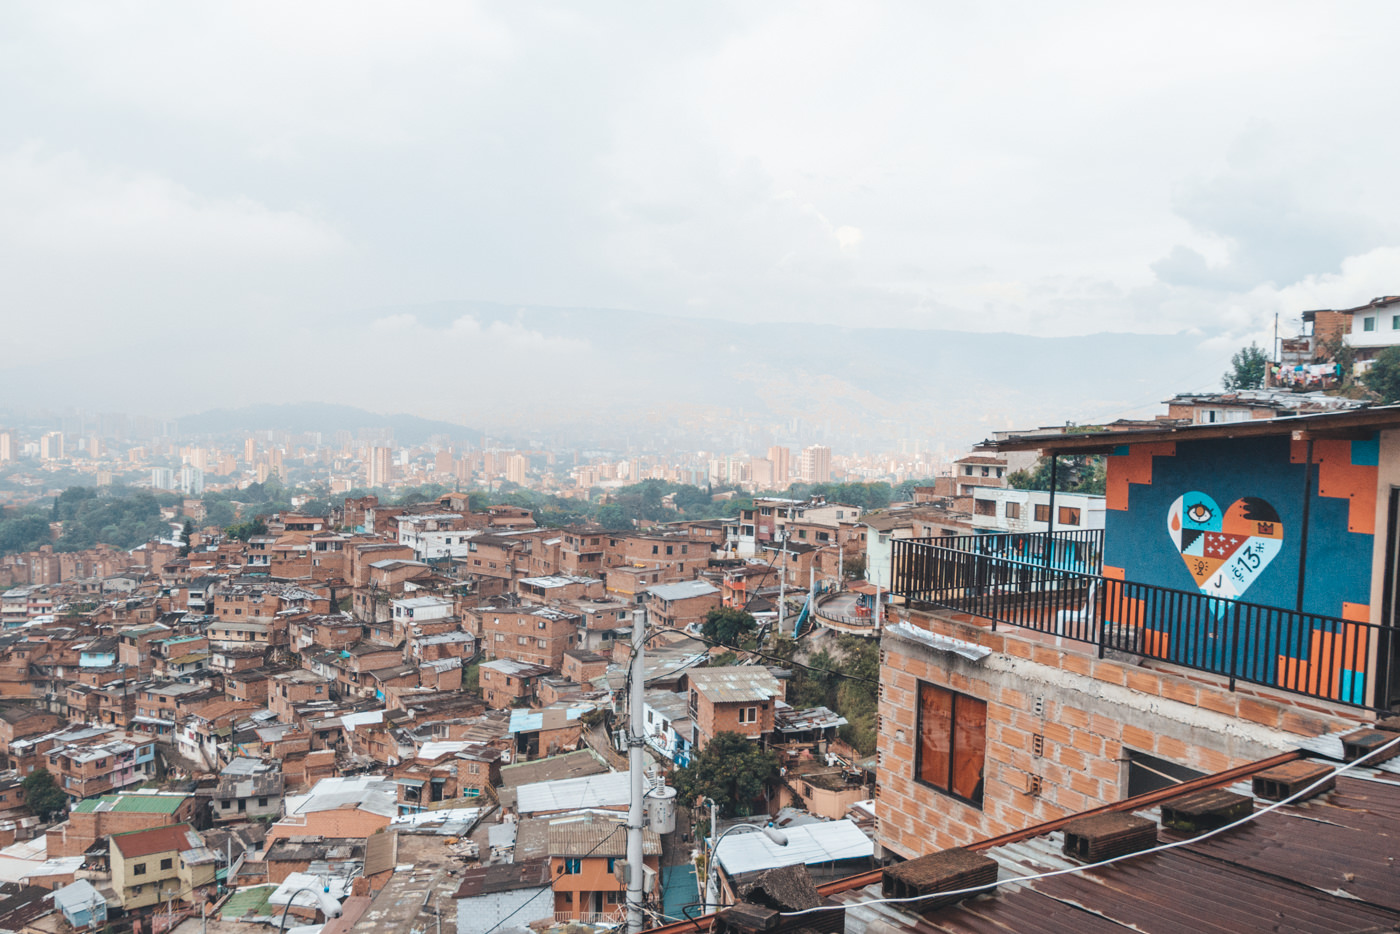 Comuna 13 in Medellín: Berühmt-berüchtigt?